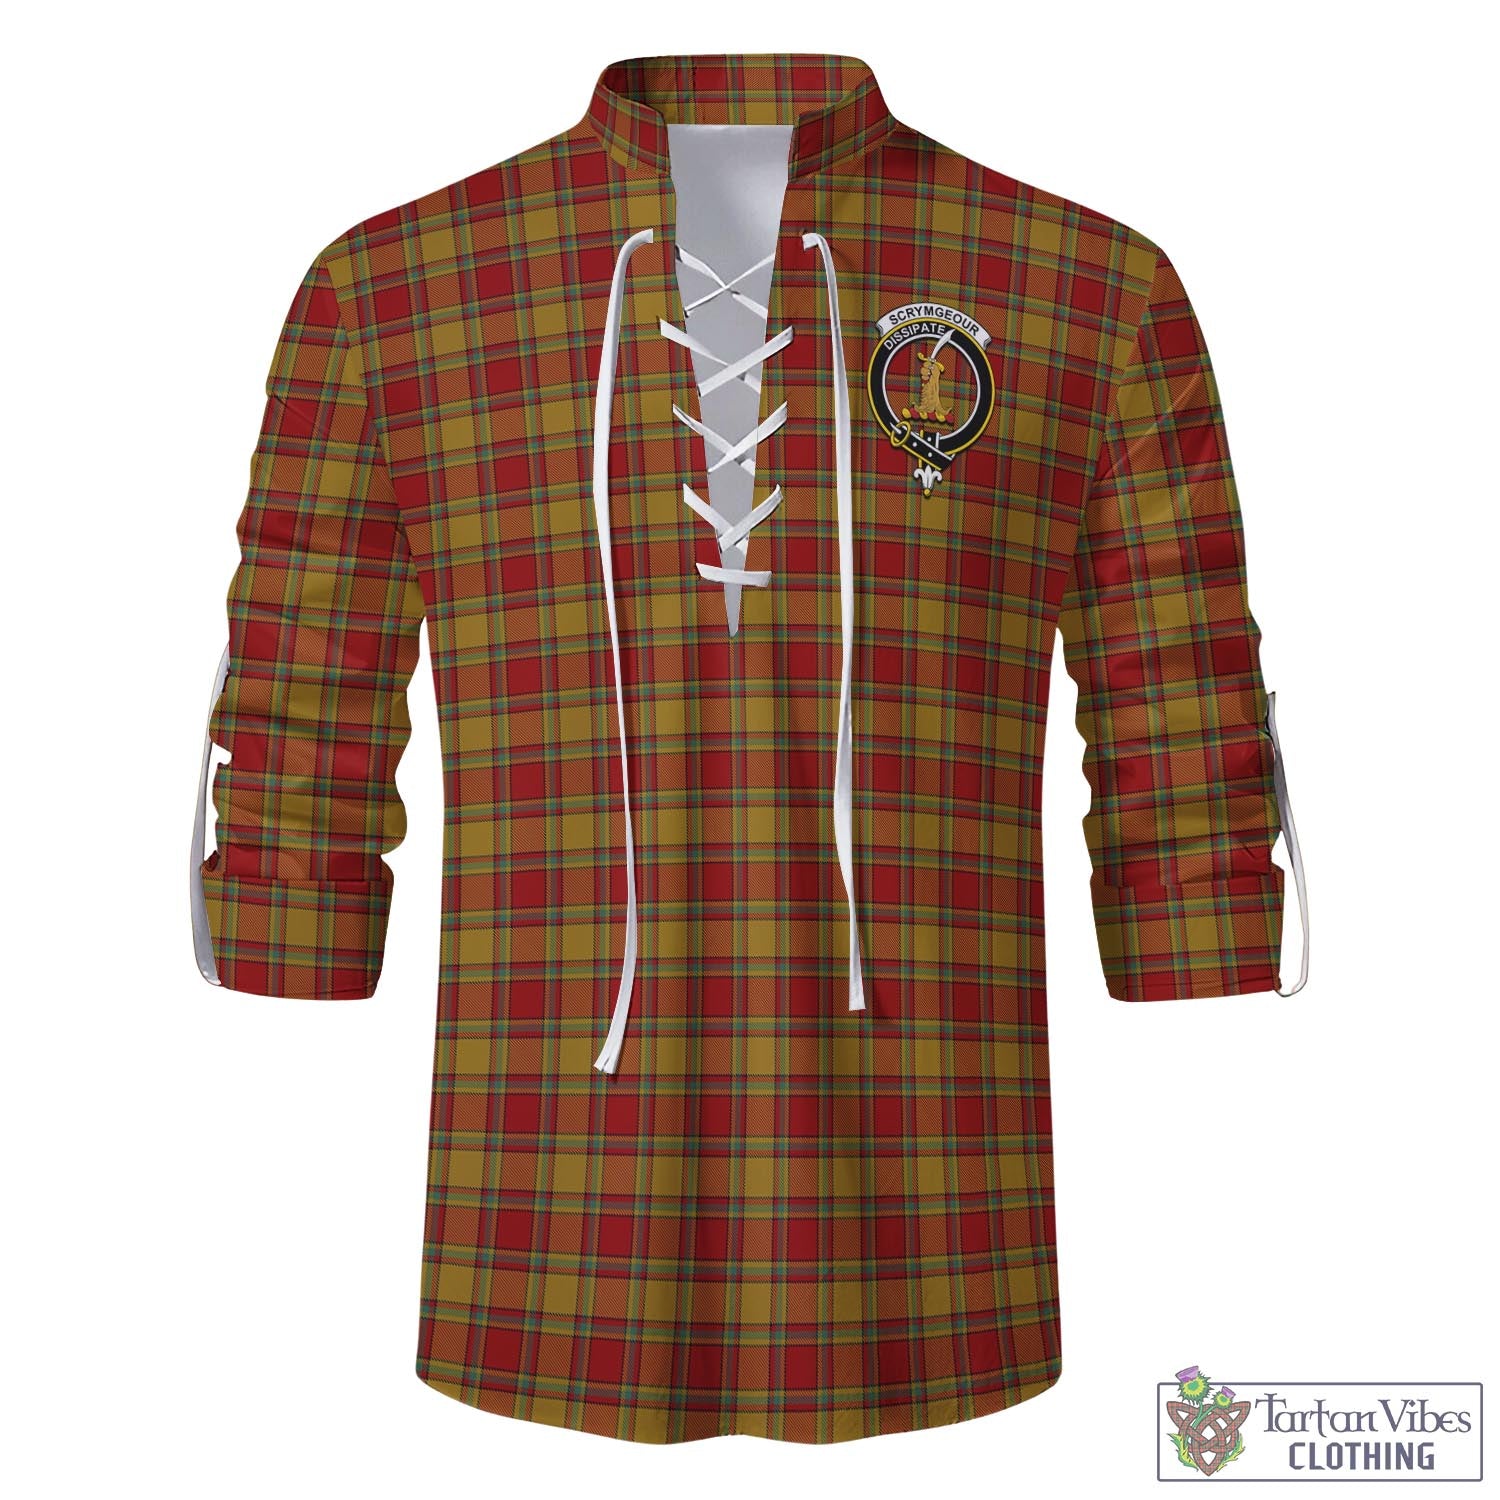 Tartan Vibes Clothing Scrymgeour Tartan Men's Scottish Traditional Jacobite Ghillie Kilt Shirt with Family Crest